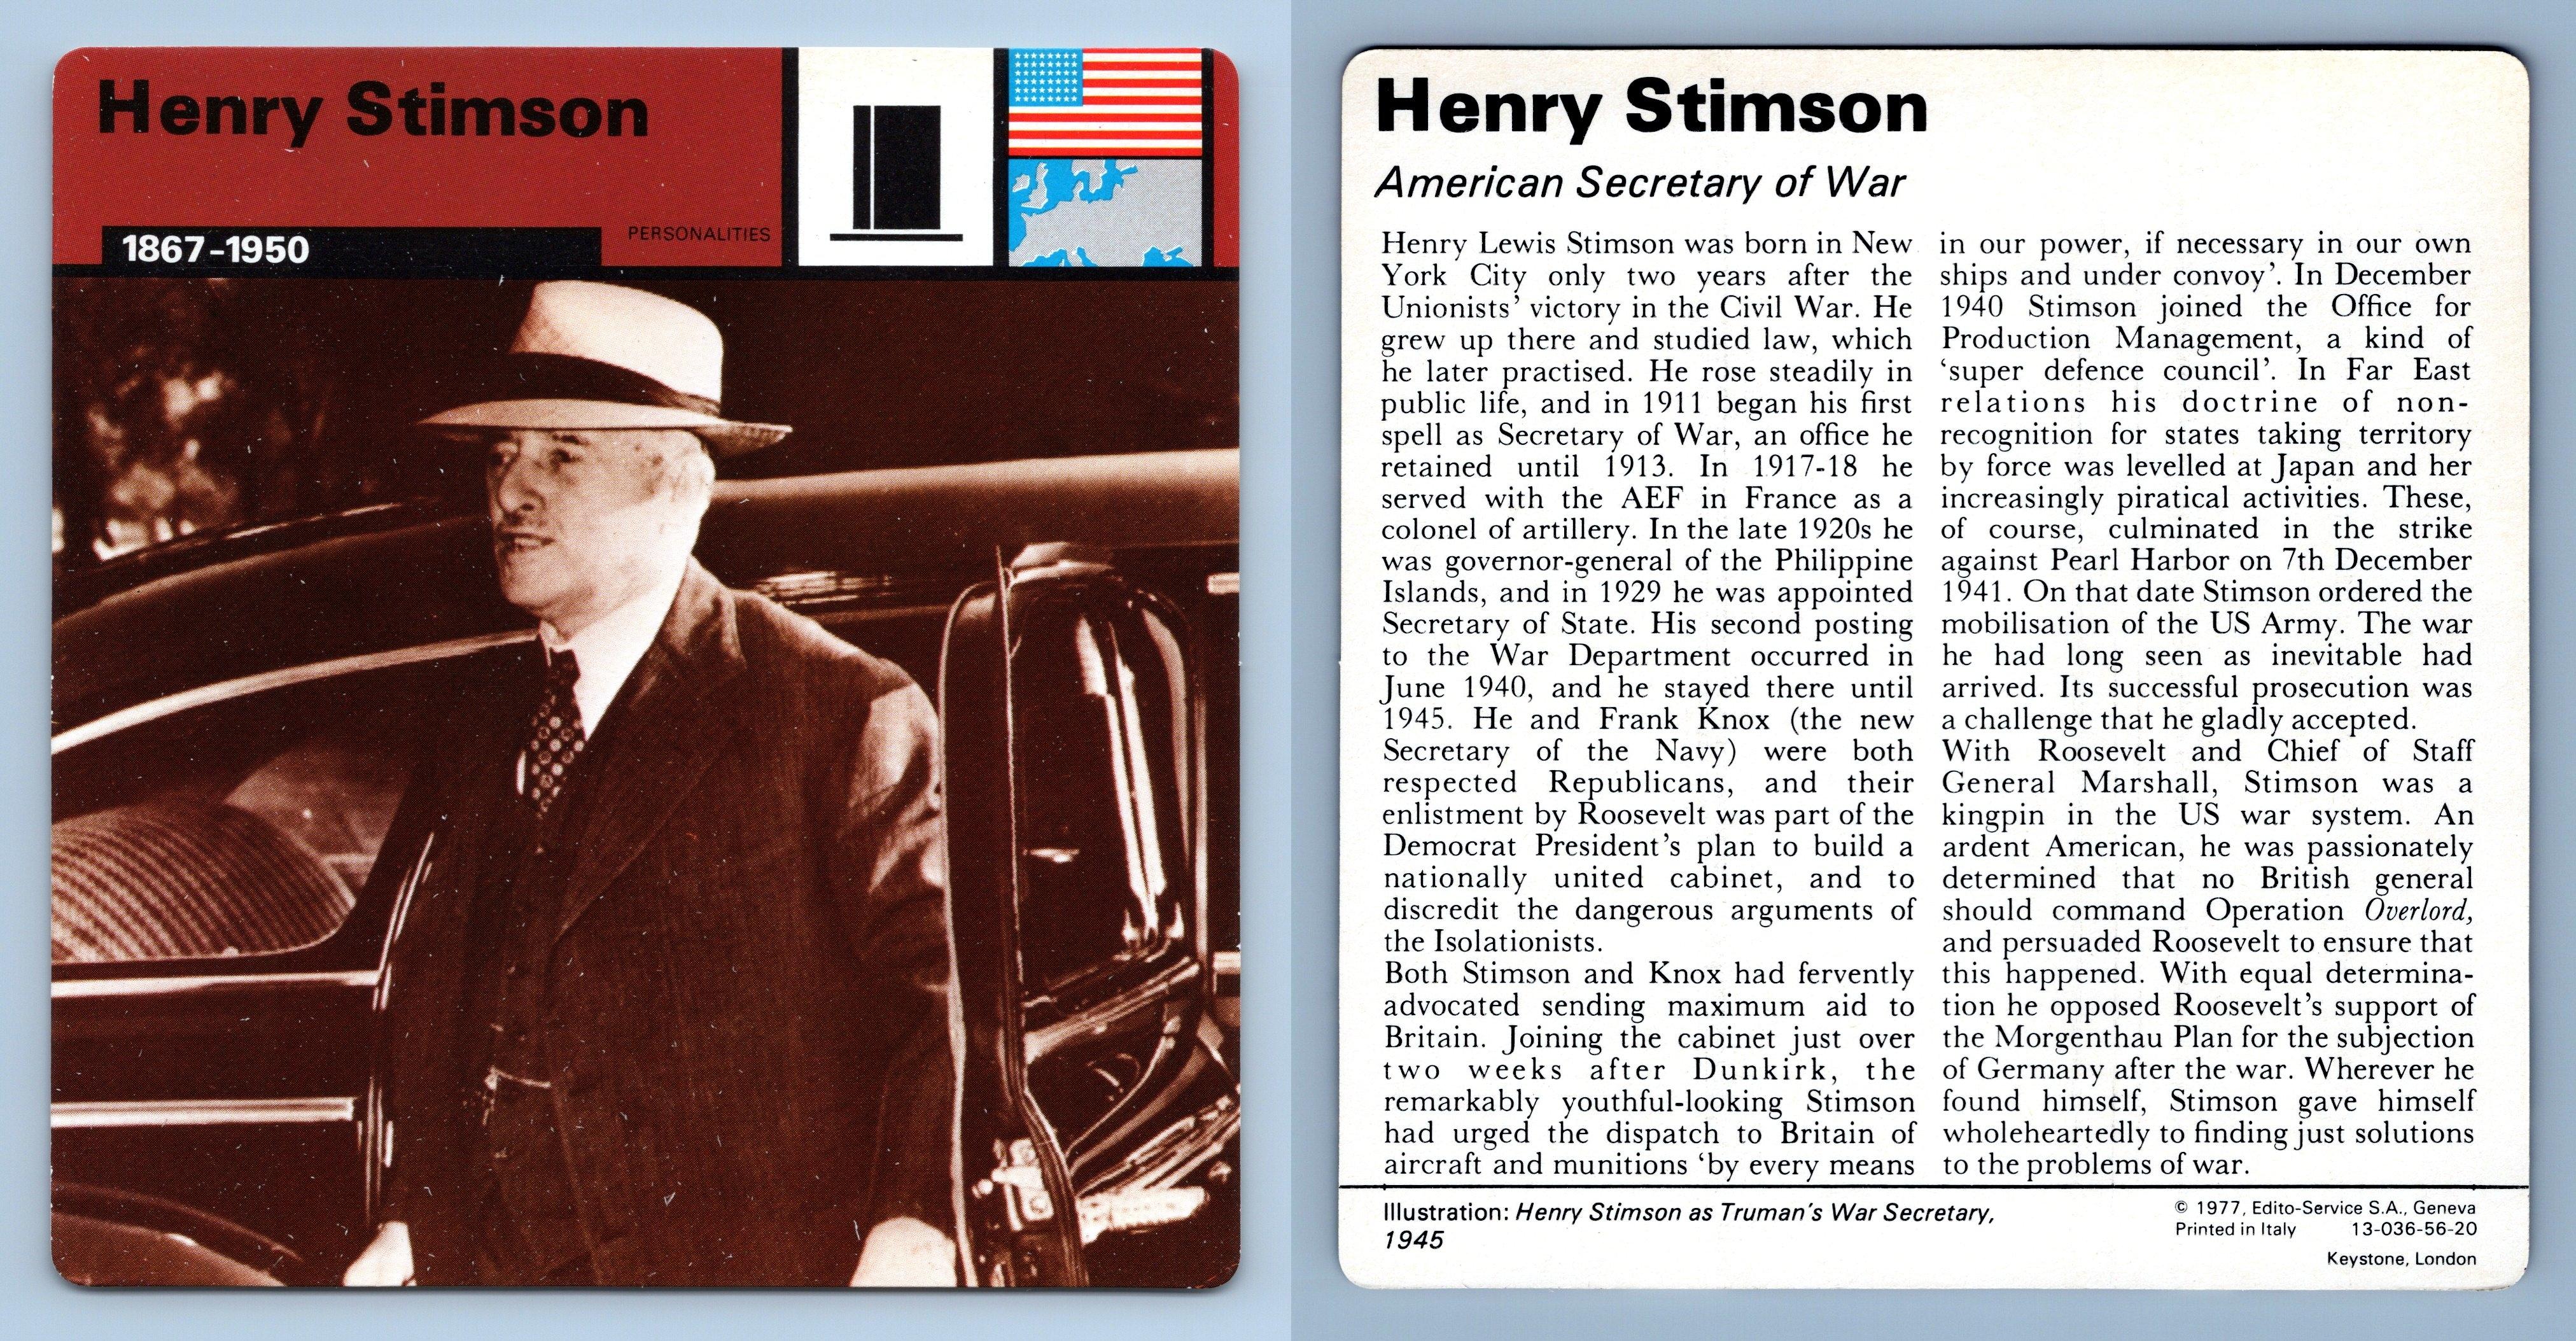 WW2 Edito-Service SA 1977 Card Henry Stimson Personalities 1867-1950 